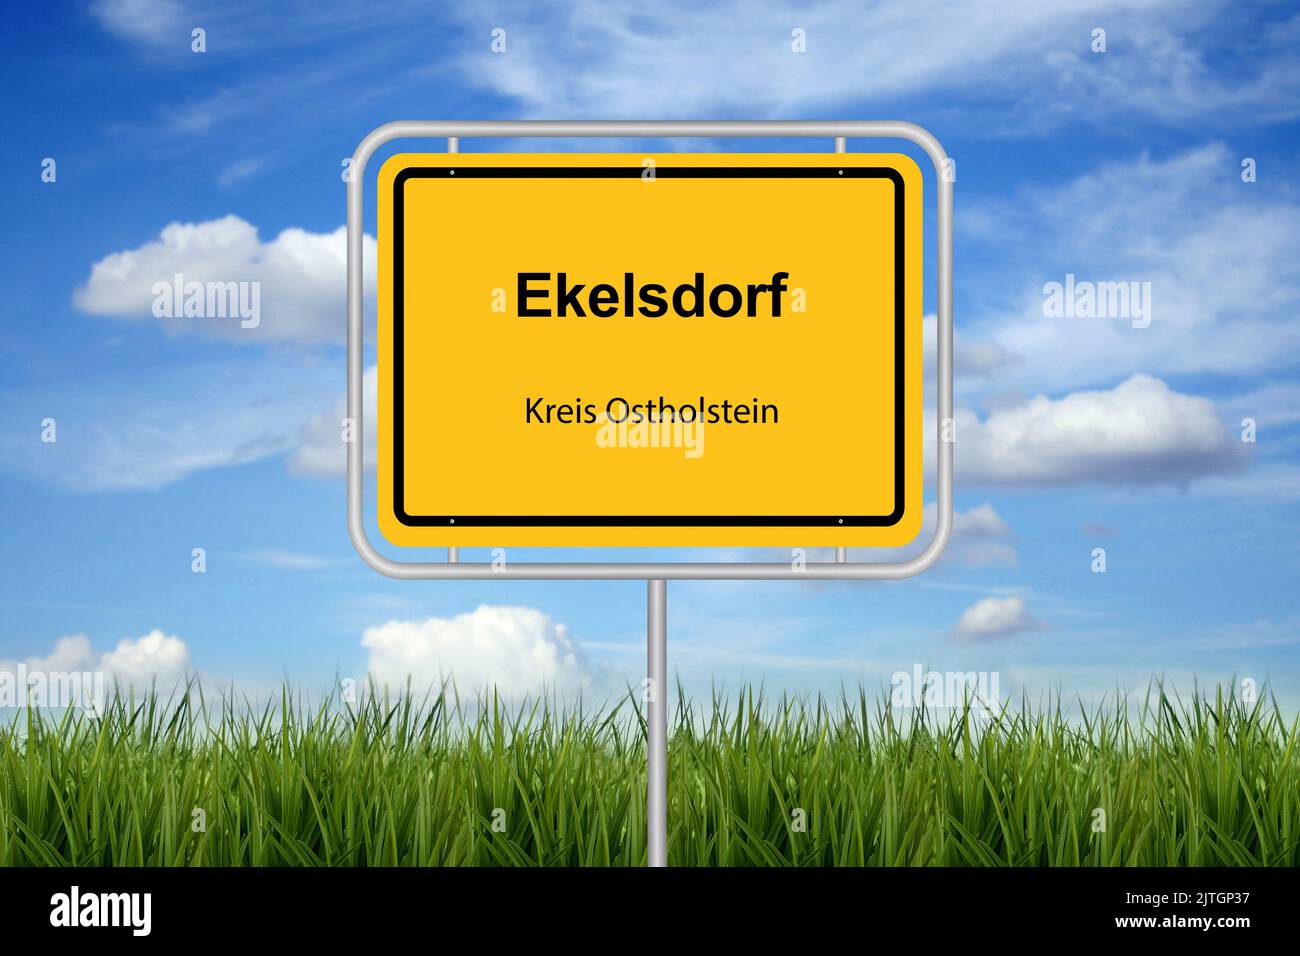 city sign lettering Ekelsdorf, Kreis Ostholstein, Germany, Schleswig-Holstein Stock Photo